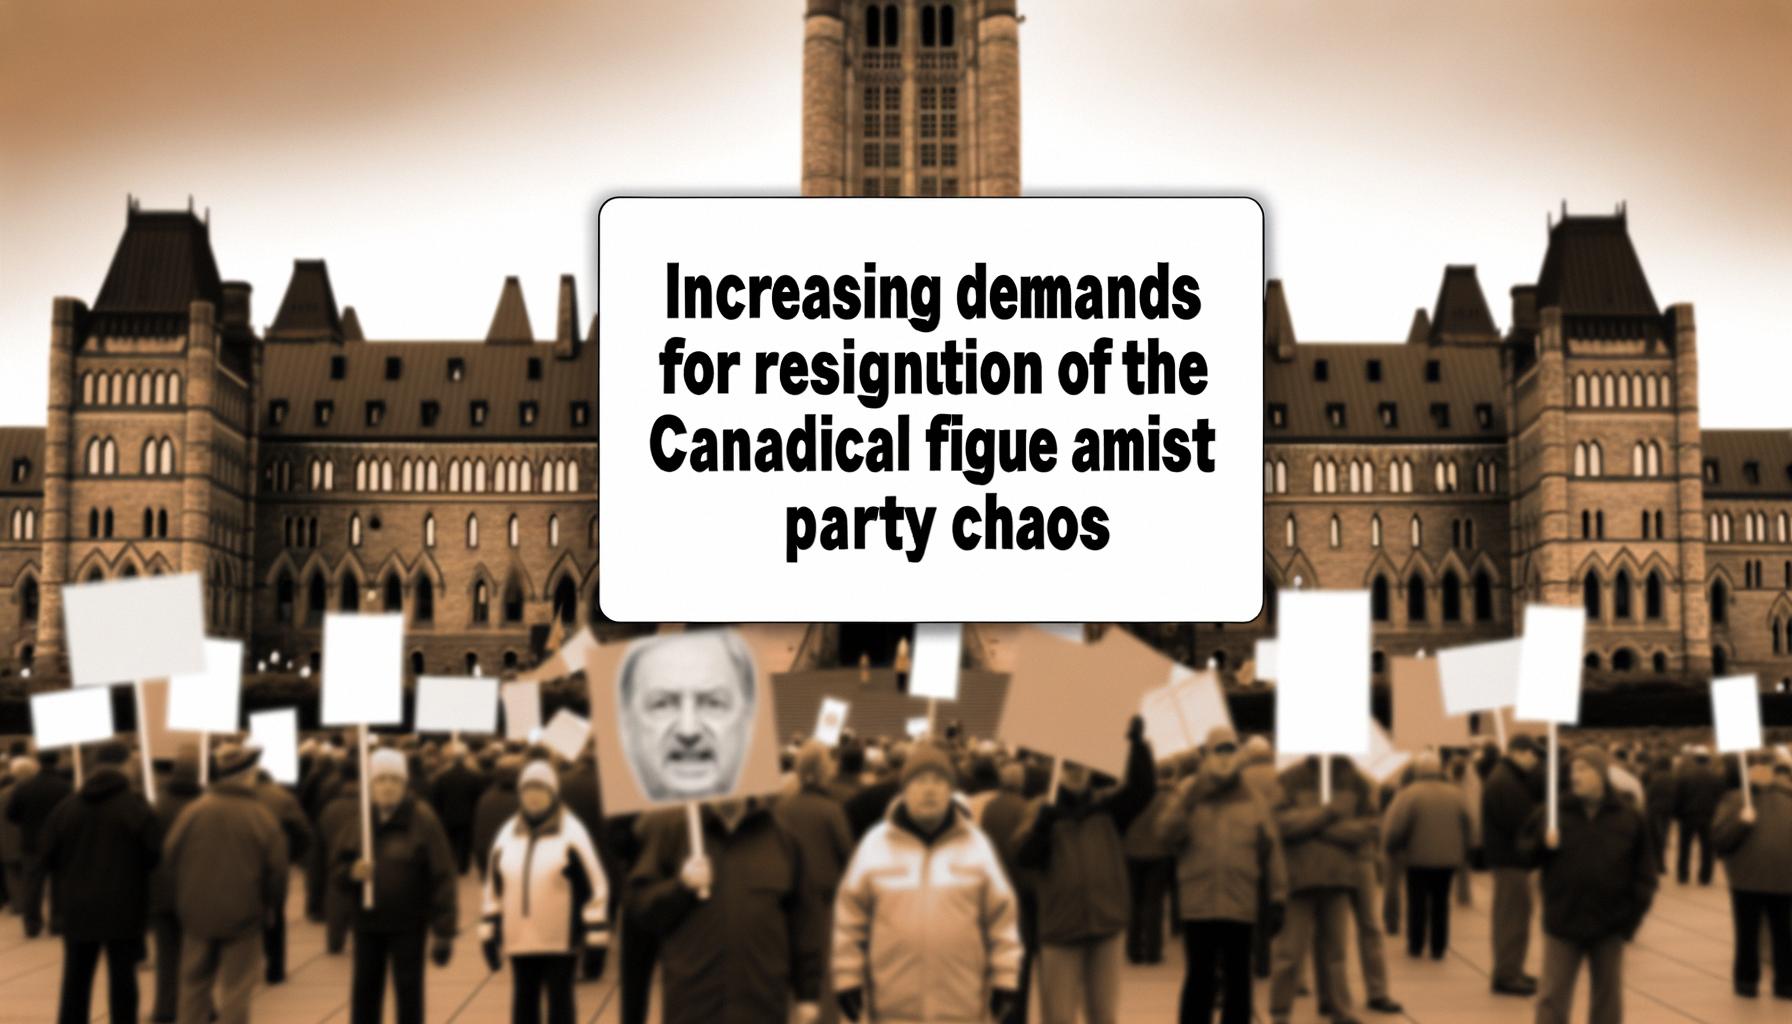 Growing calls for Trudeau's resignation amid party turmoil Balanced News